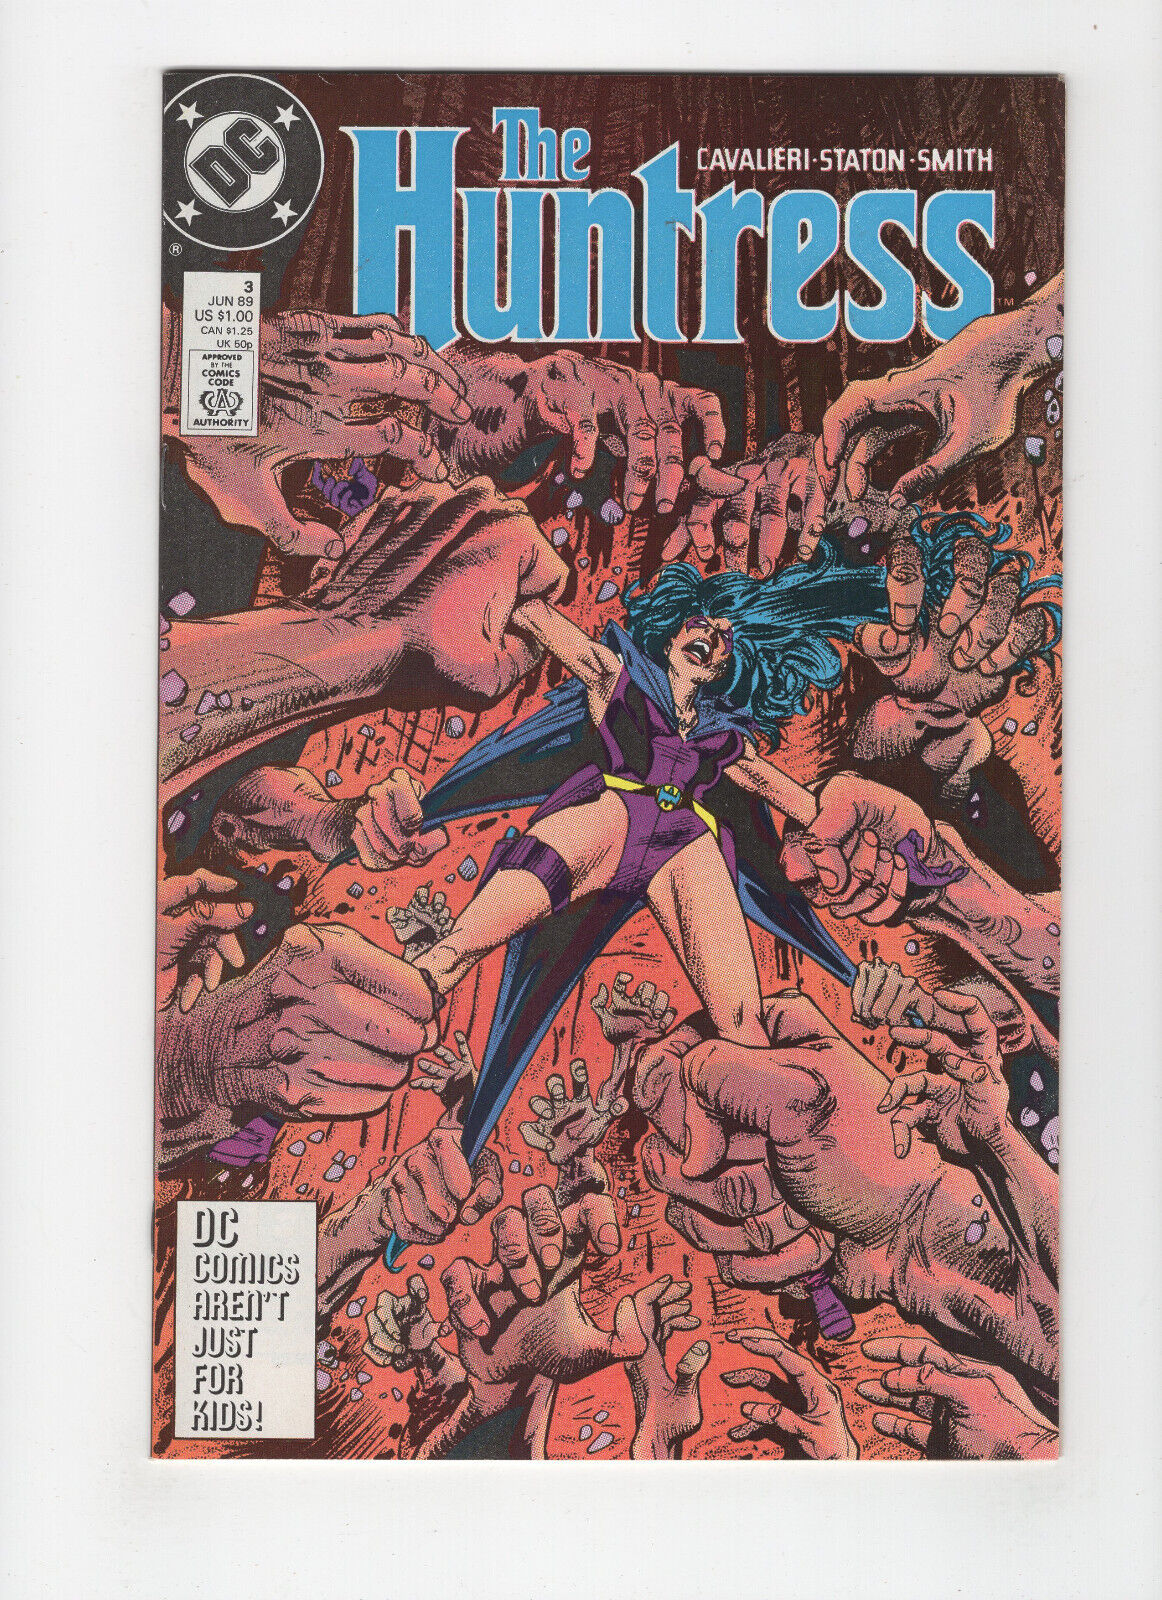 The Huntress #3 (DC Comics 1989)